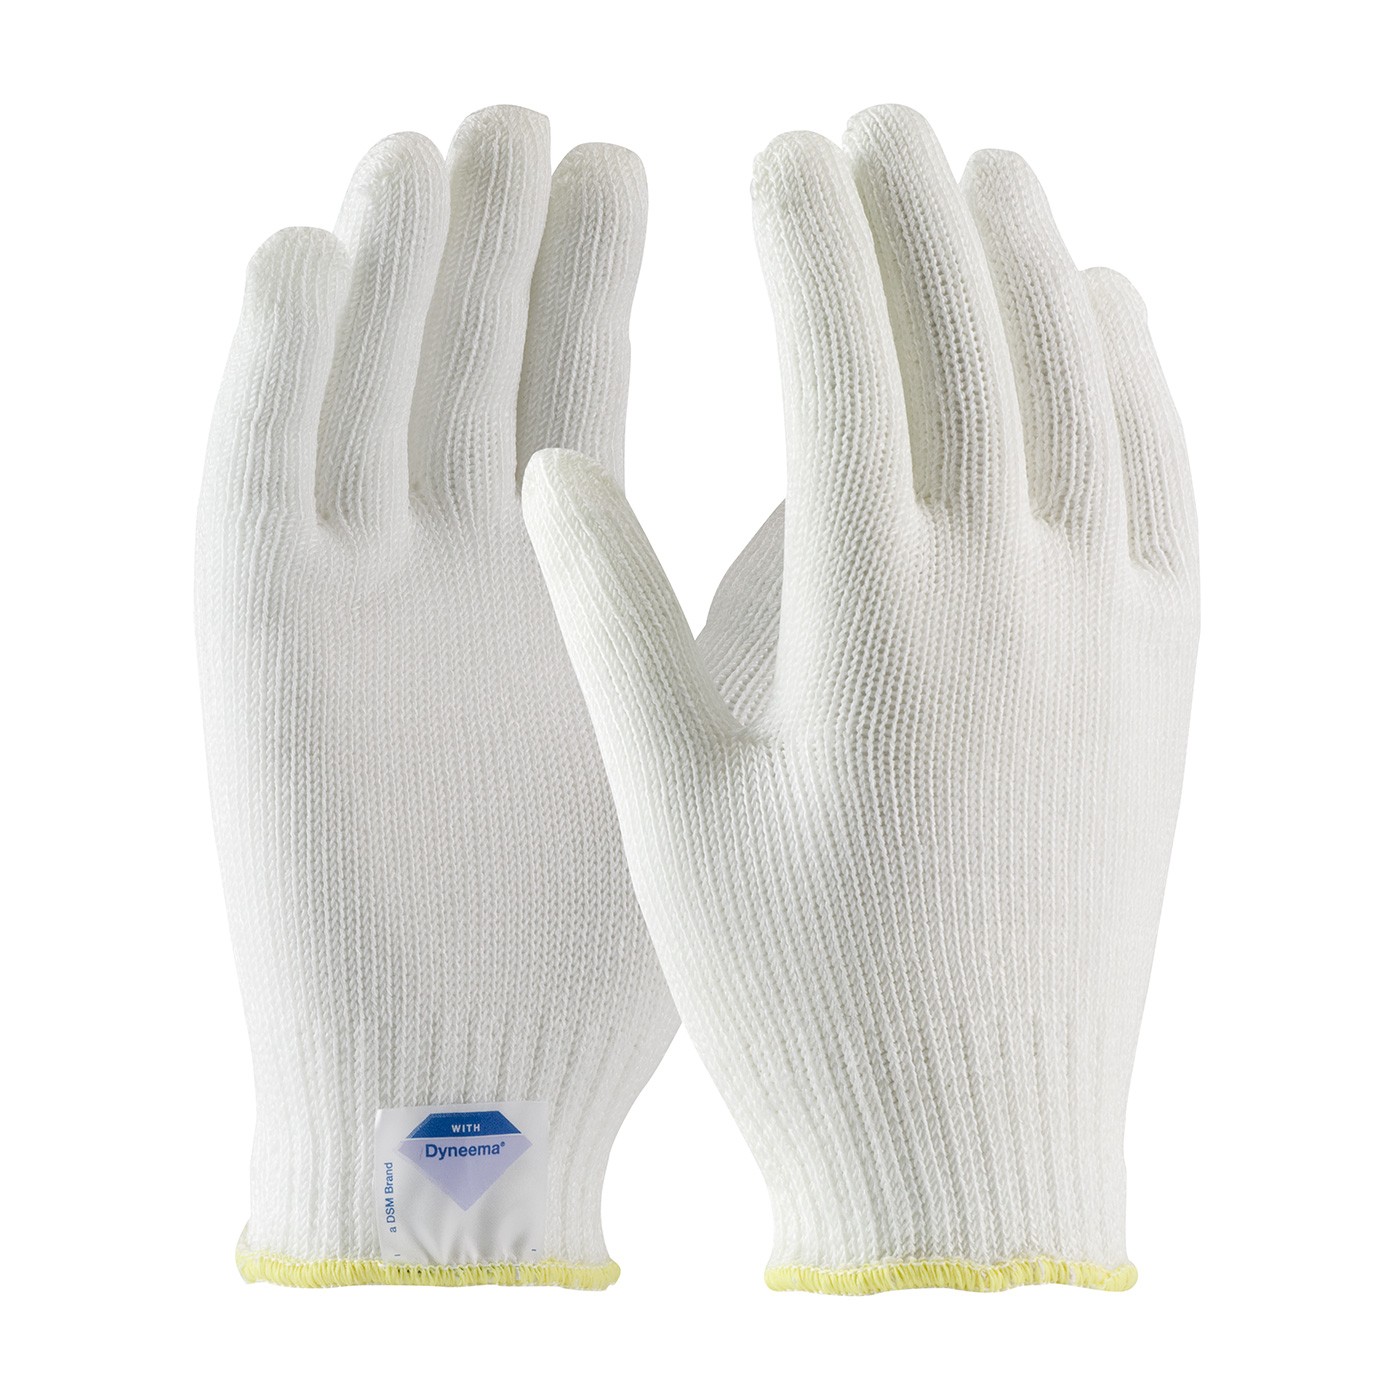 Kut Gard® Seamless Knit Dyneema® / Lycra Glove - Medium Weight  (#17-DL300)